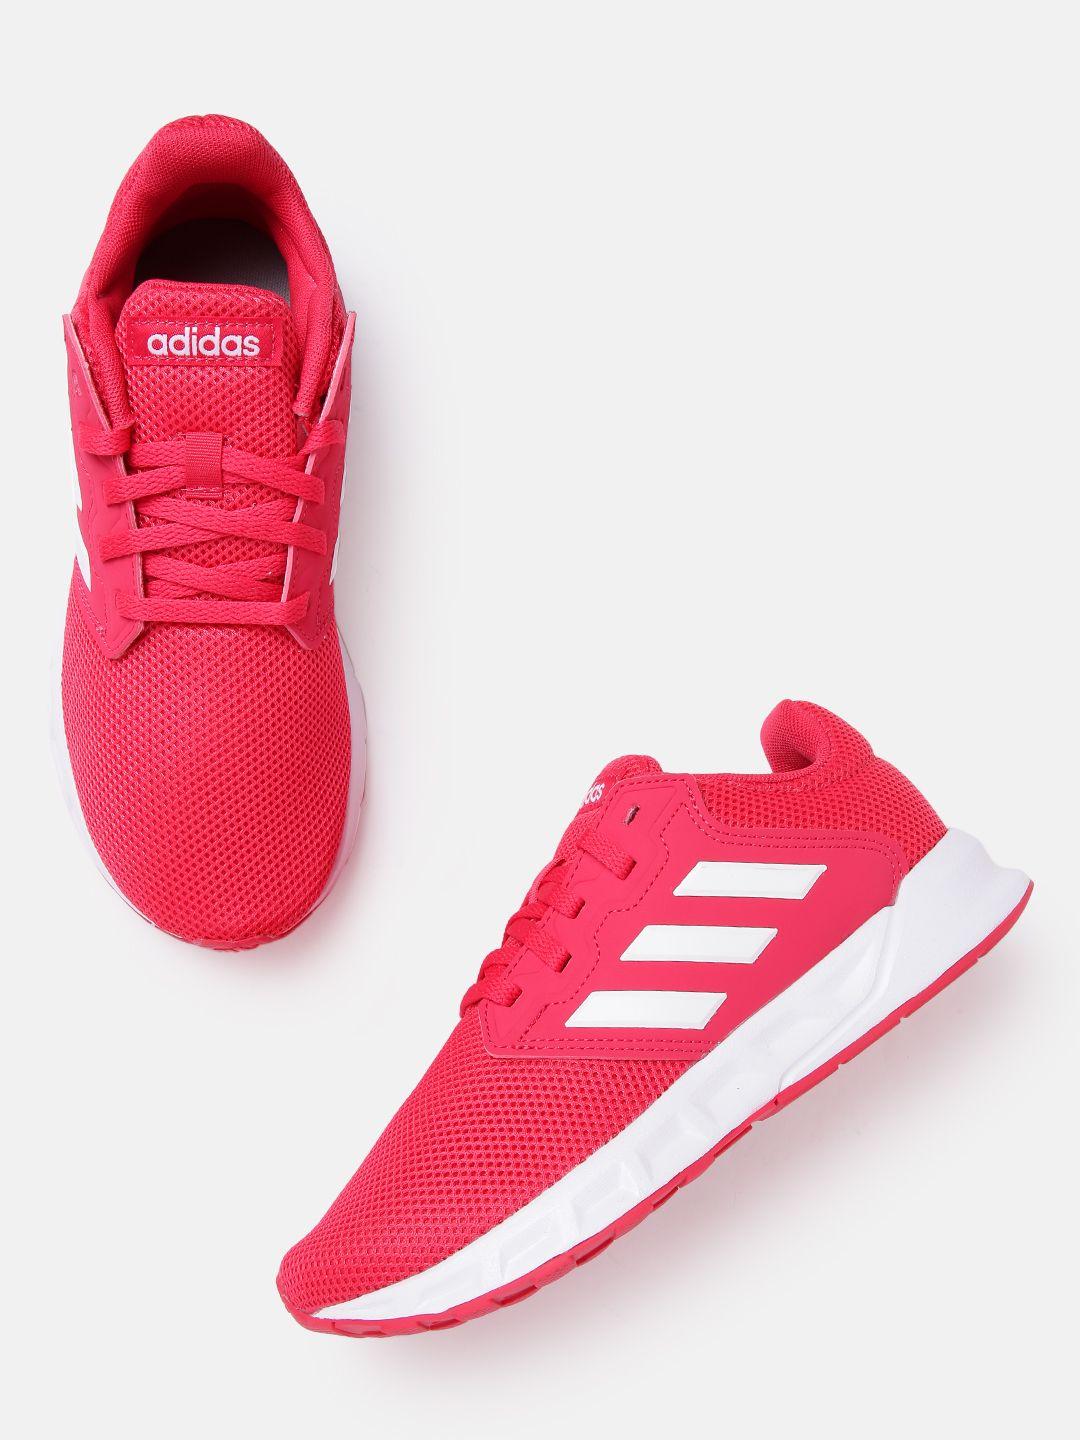 adidas women pink shoetheway sneakers